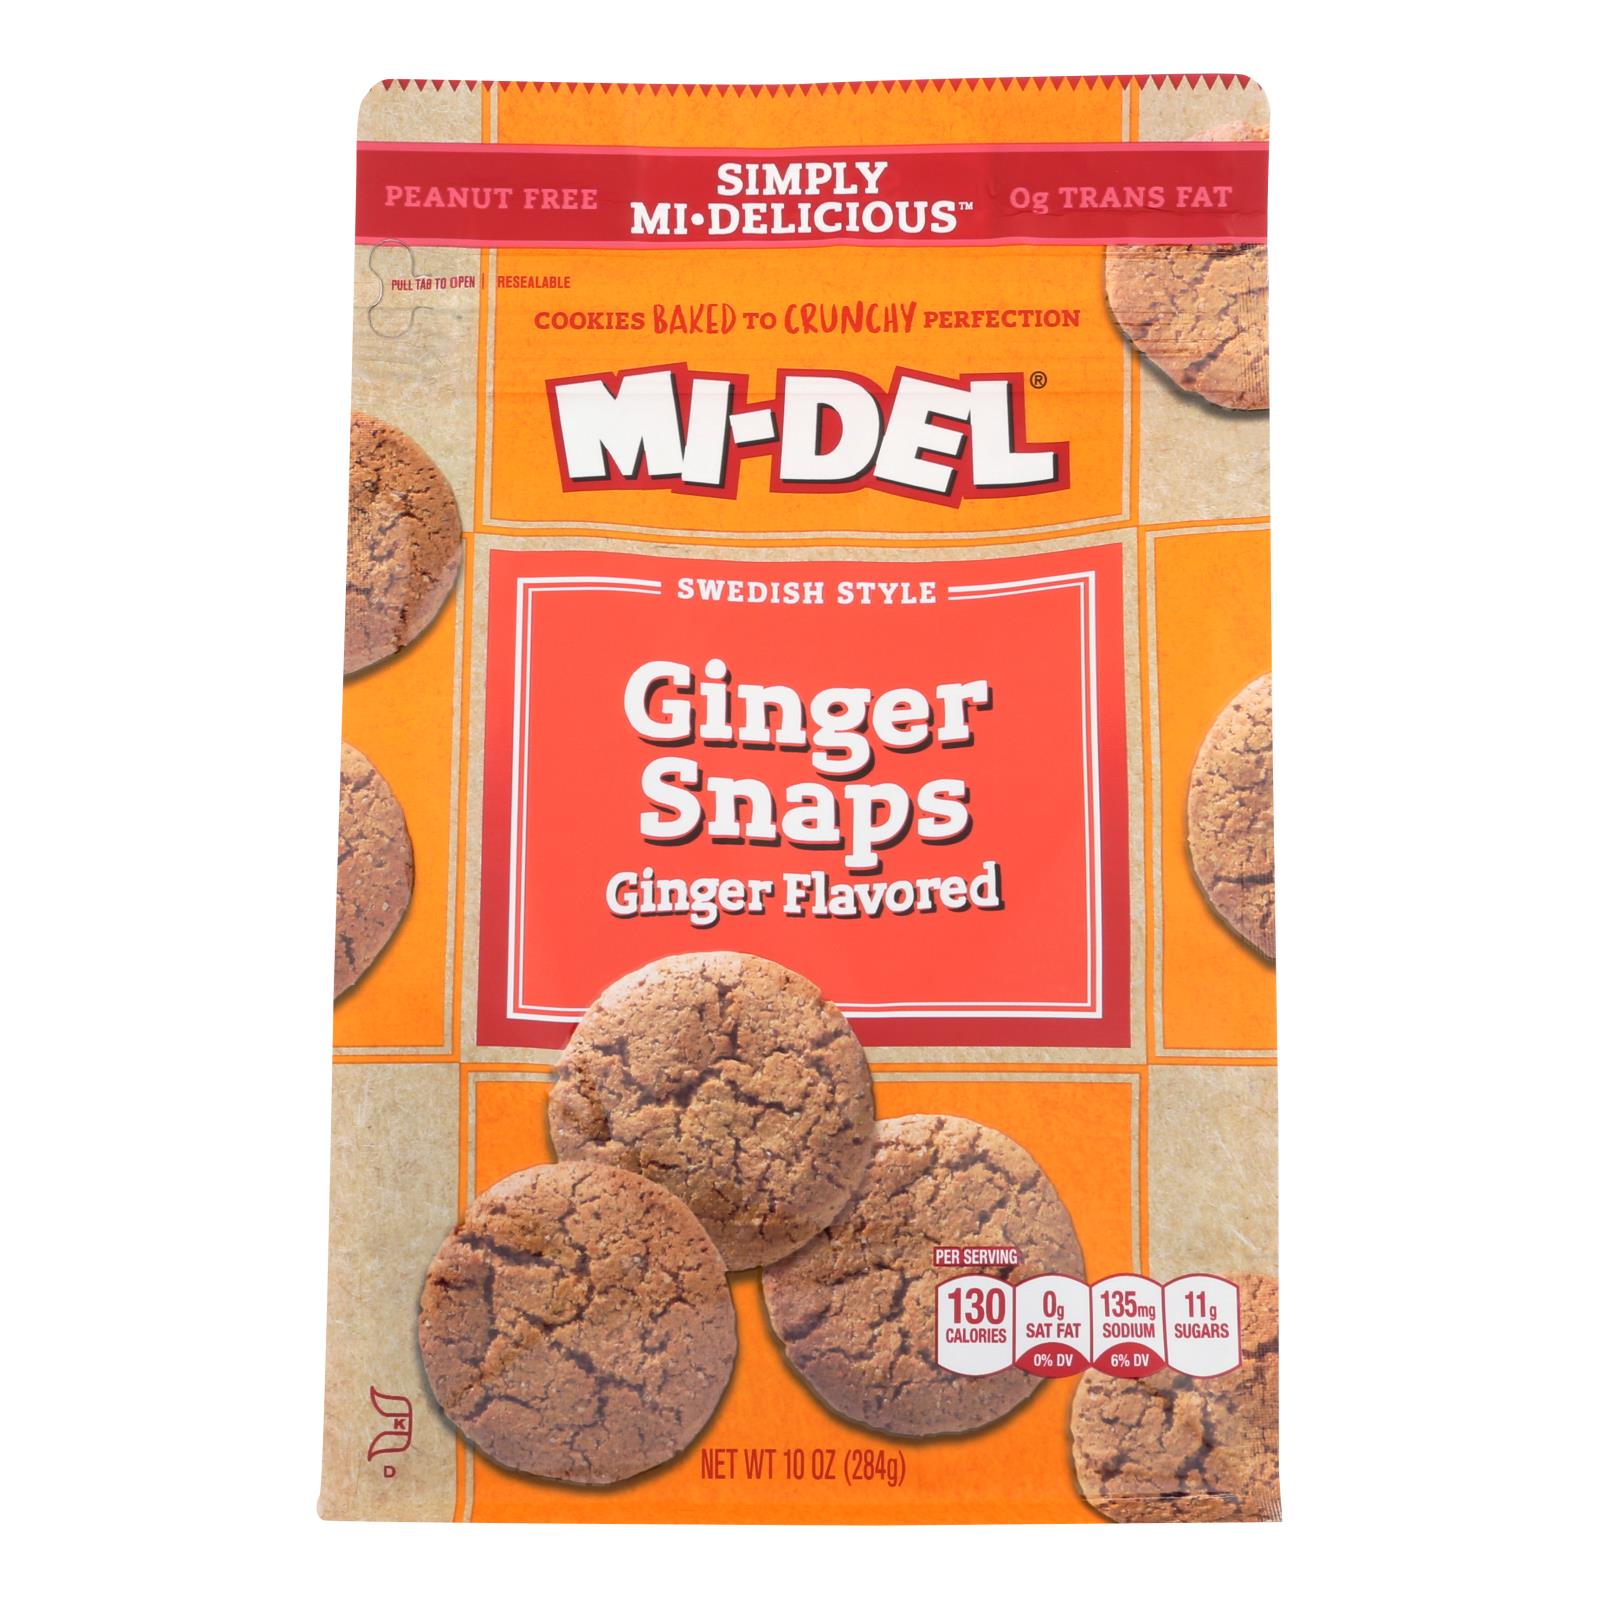 Mi-Del's Original Flavored Ginger Snaps Cookies - 8개 묶음상품 - 10 OZ